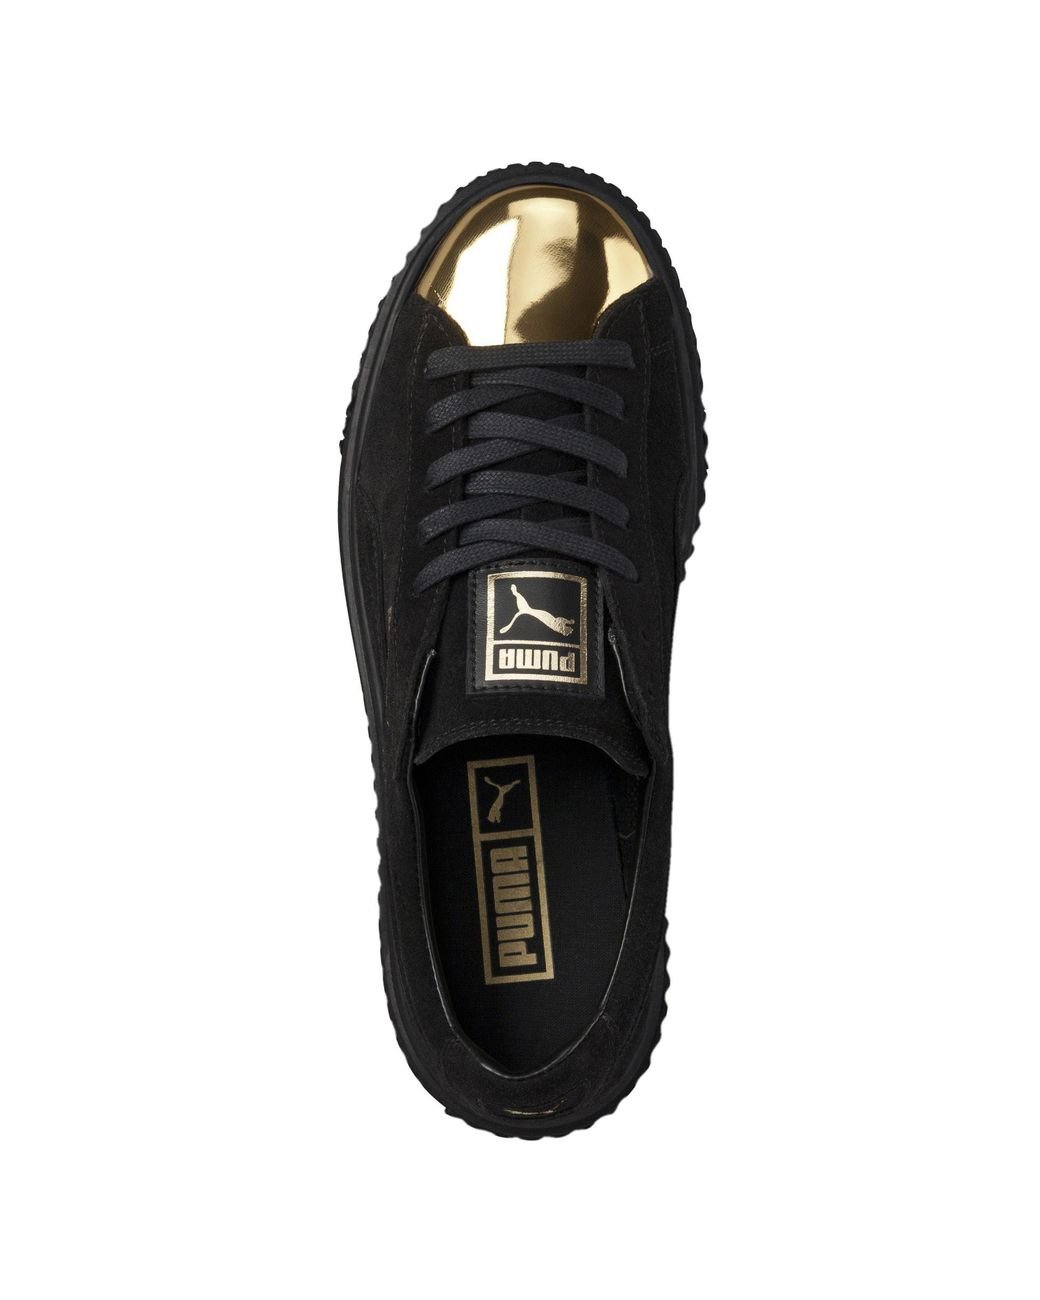 PUMA Suede Platform Gold Women's Sneakers in Black | Lyst